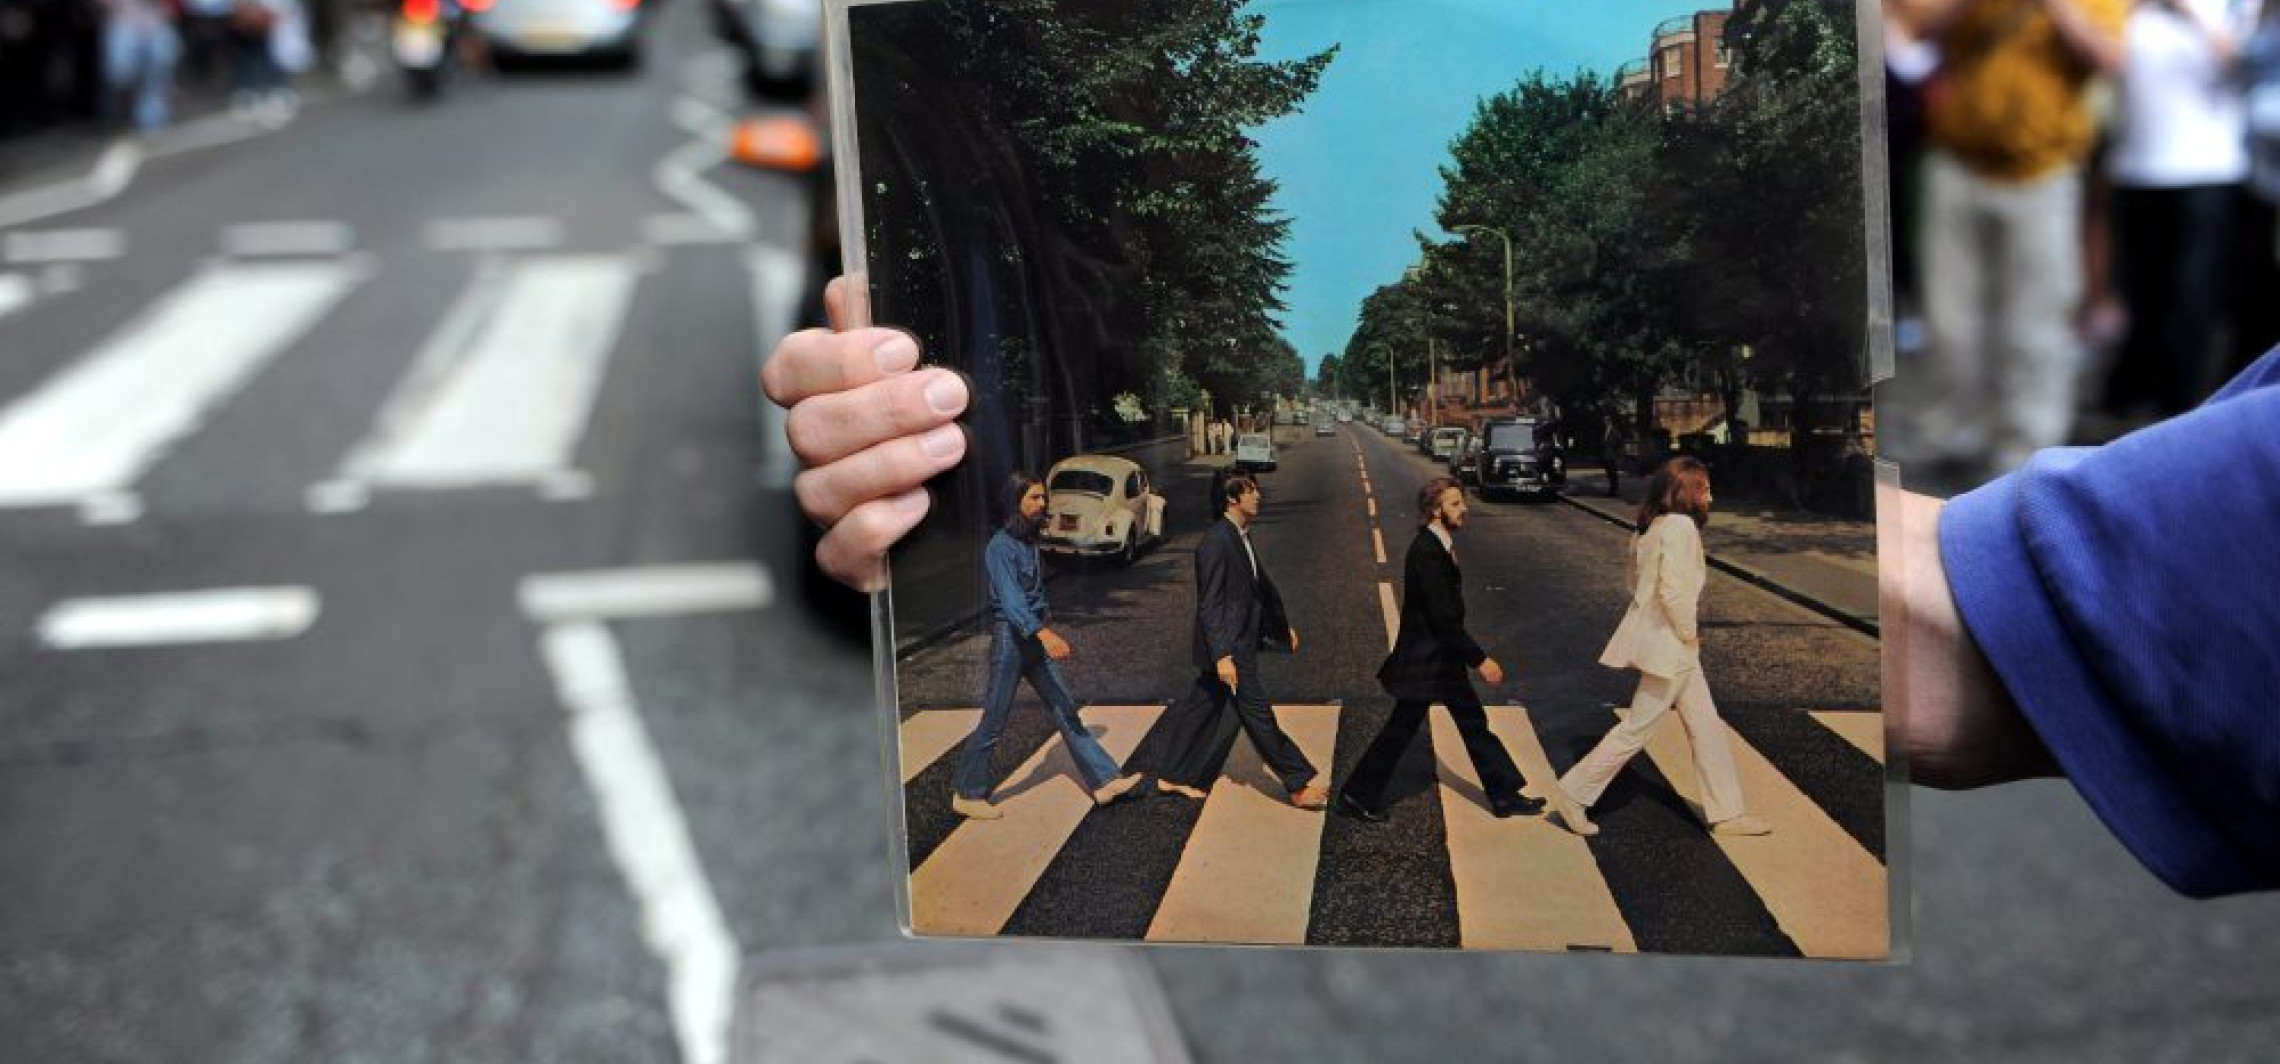 Po 50 latach od premiery powraca album "Abbey Road" The Beatles